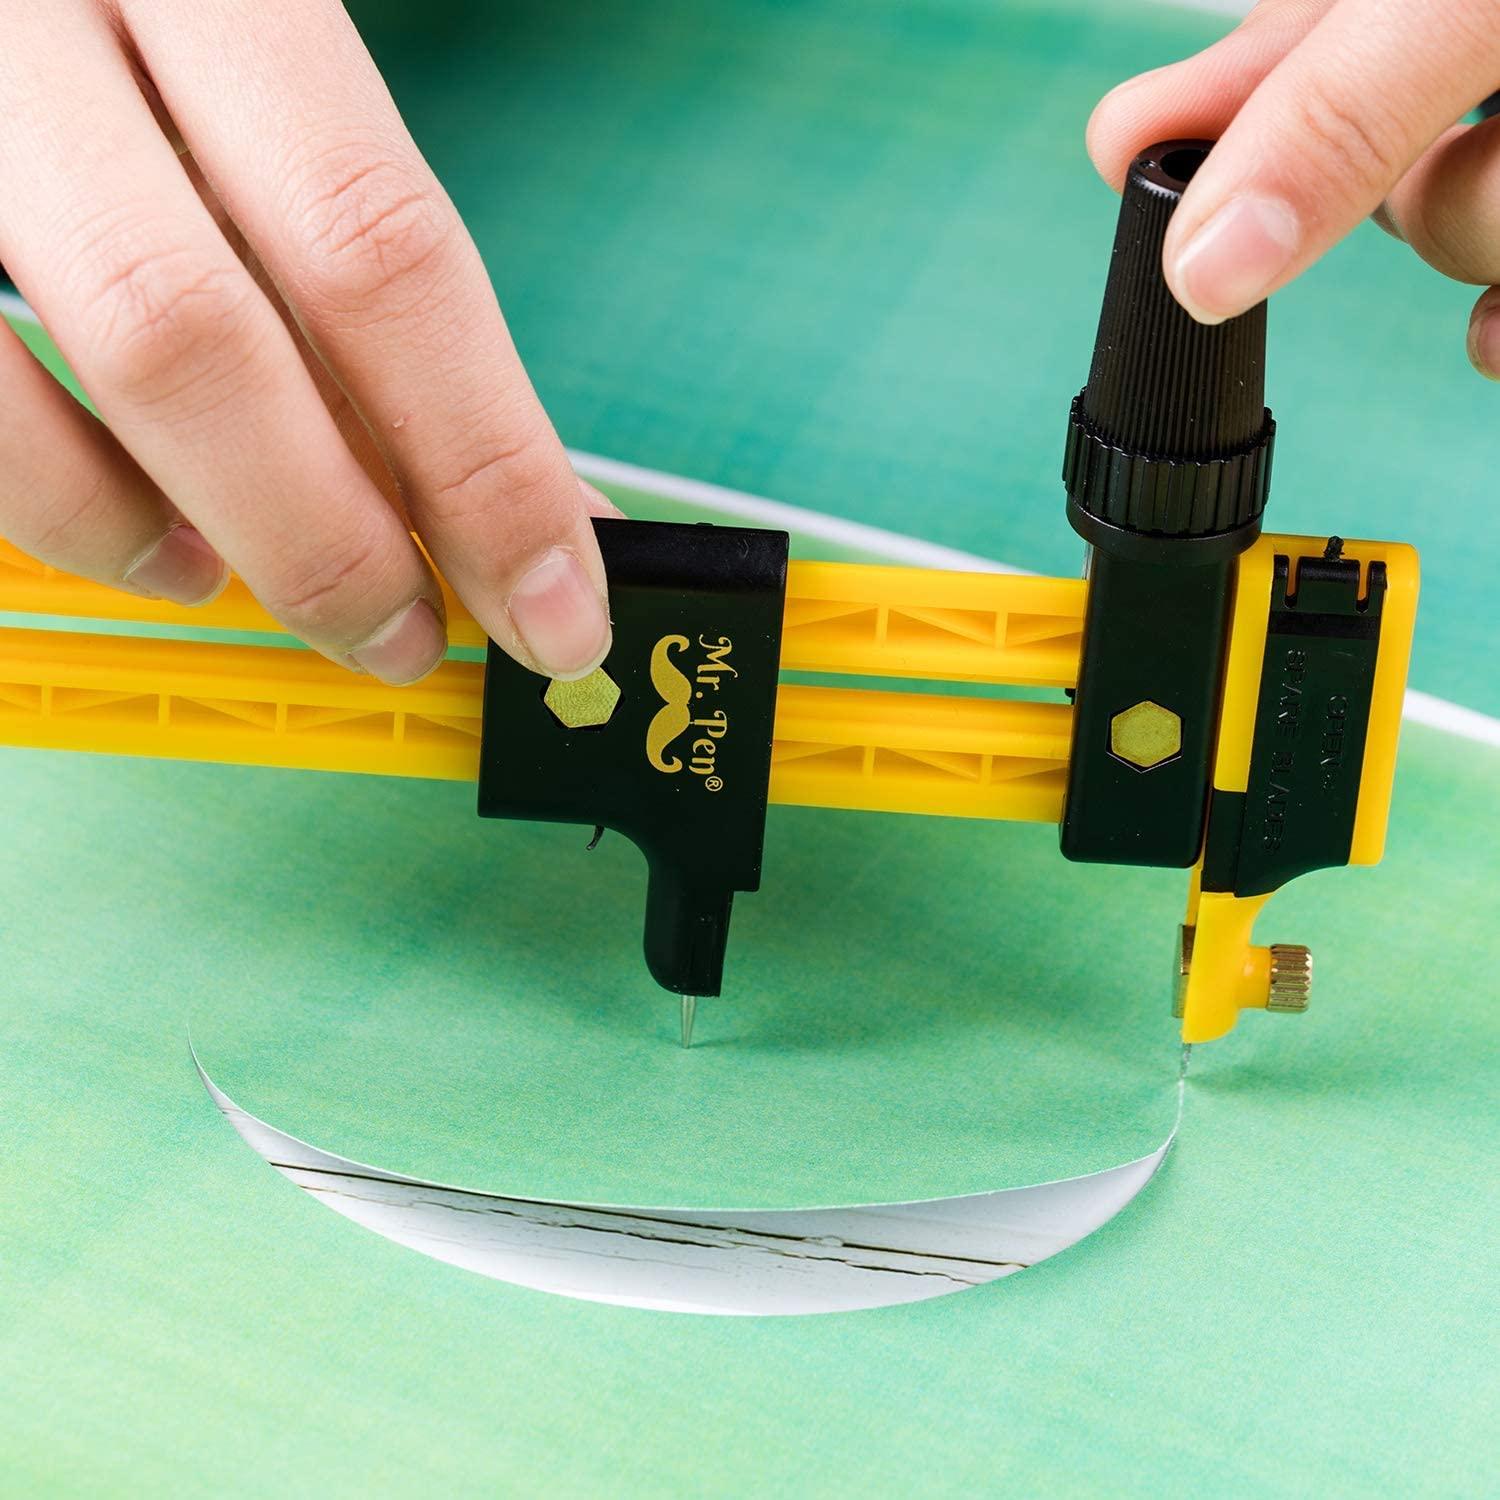 Mr. Pen- 6.25In, Fabric Circle Cutter for Paper Crafts, Compass / Circular  Cutter, Cutting Compass